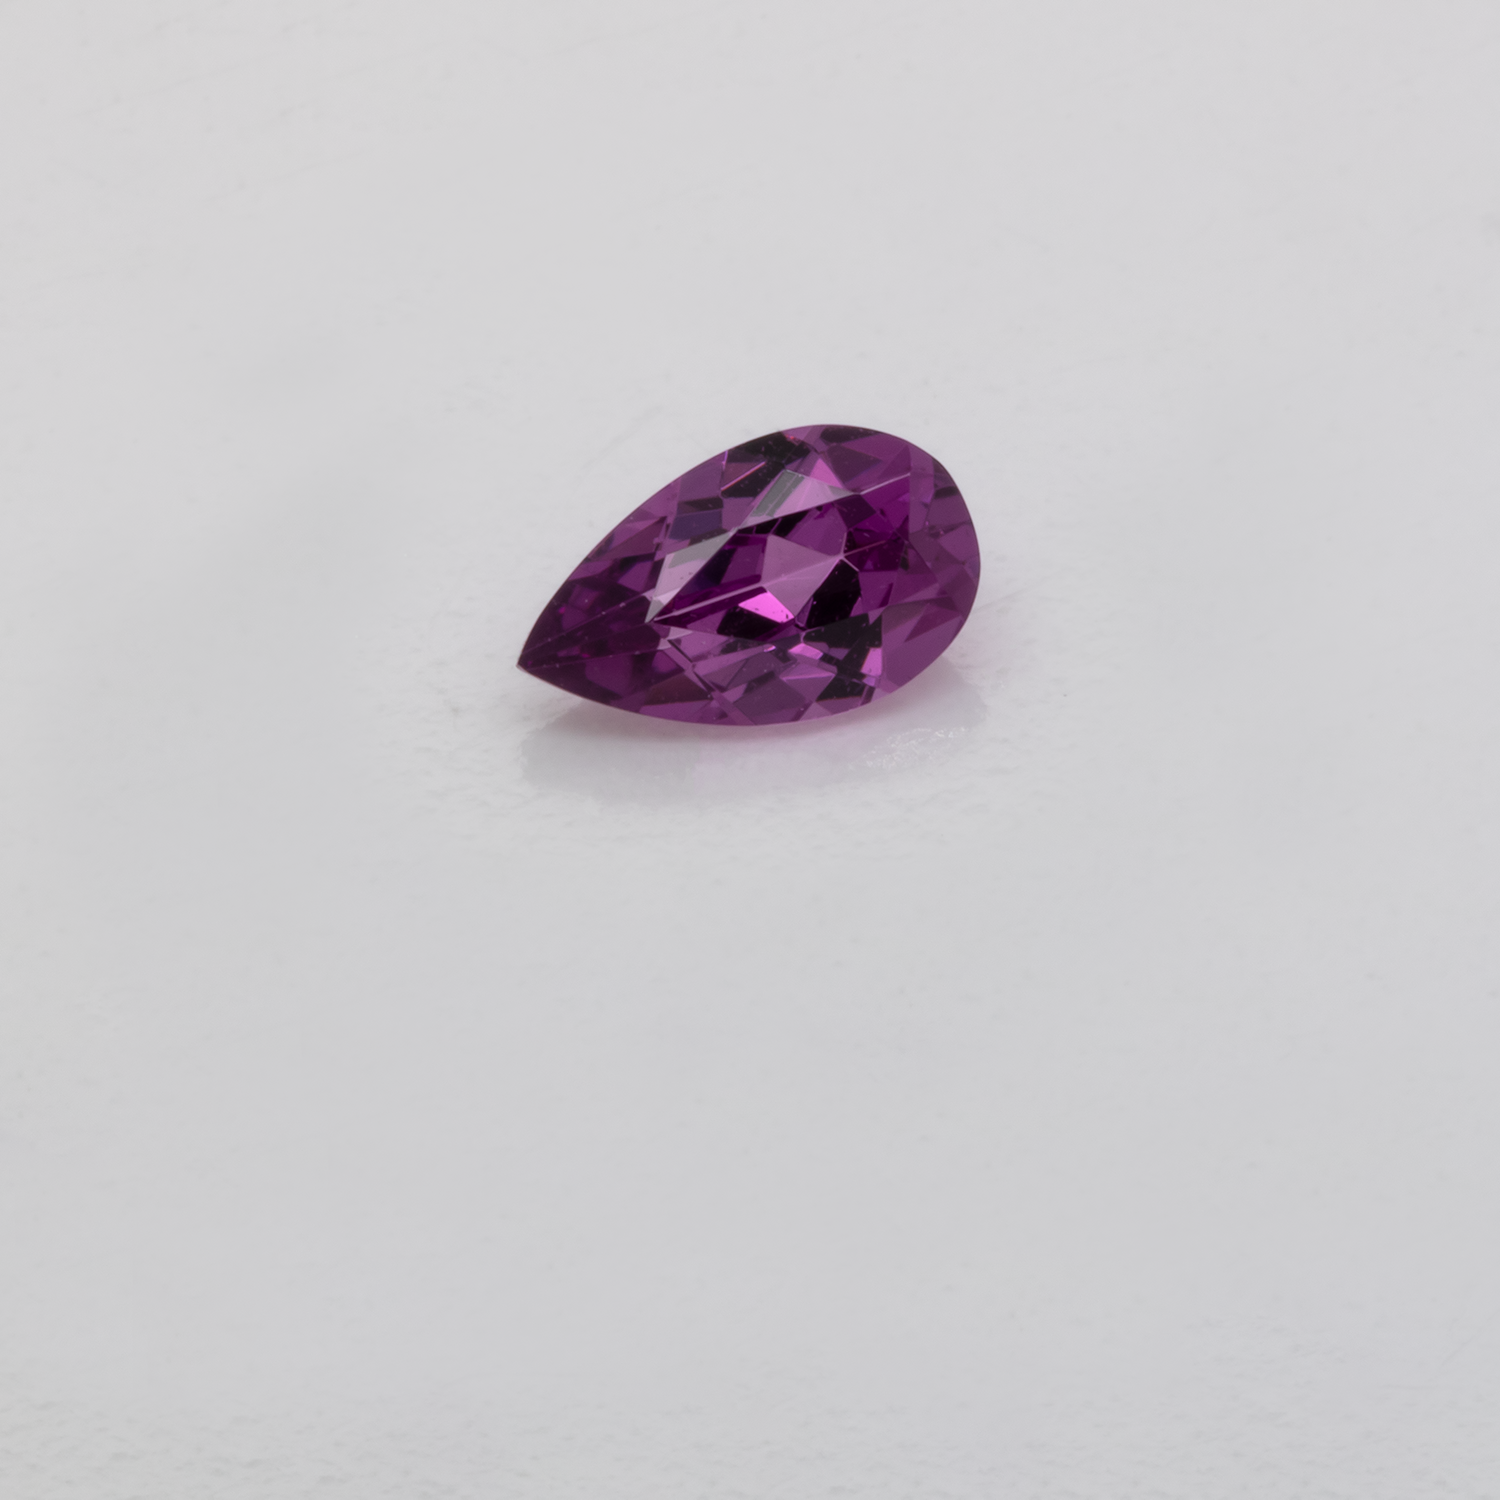 Royal Purple Garnet - purple, pearshape, 5x3 mm, 0.22-0.26 cts, No. RP93002